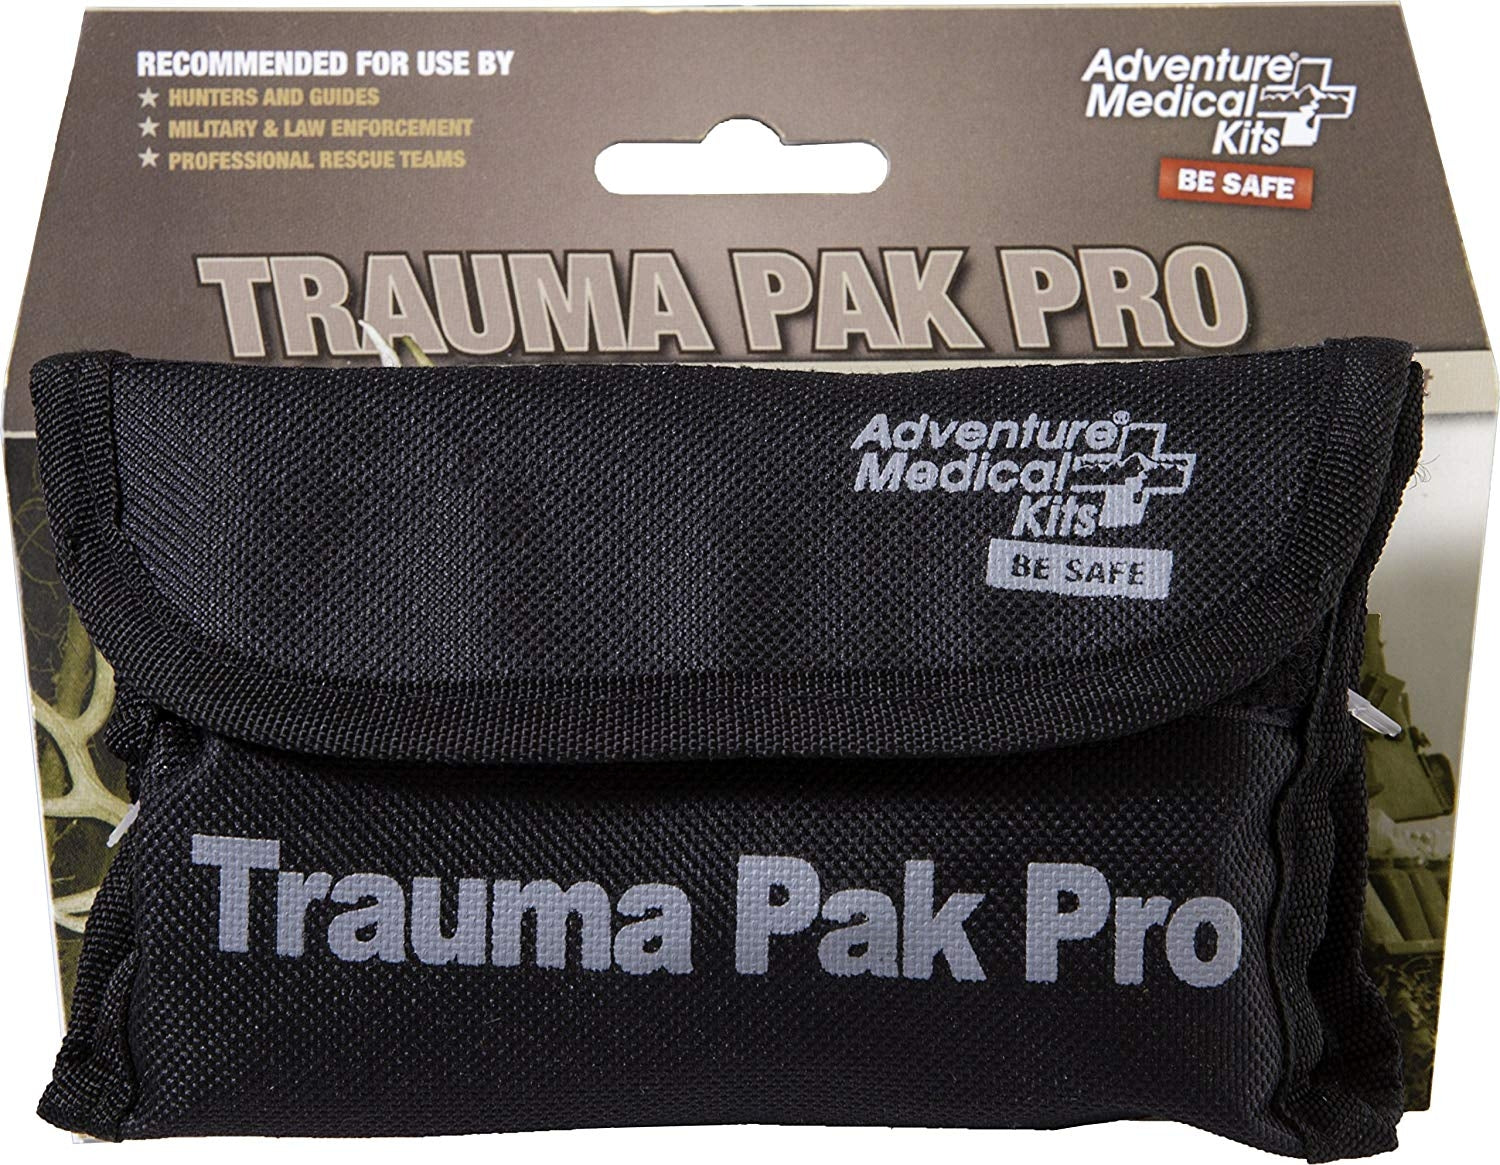 Trauma Pak Pro with QuikClot & Swat-T by Adventure Medical Kits